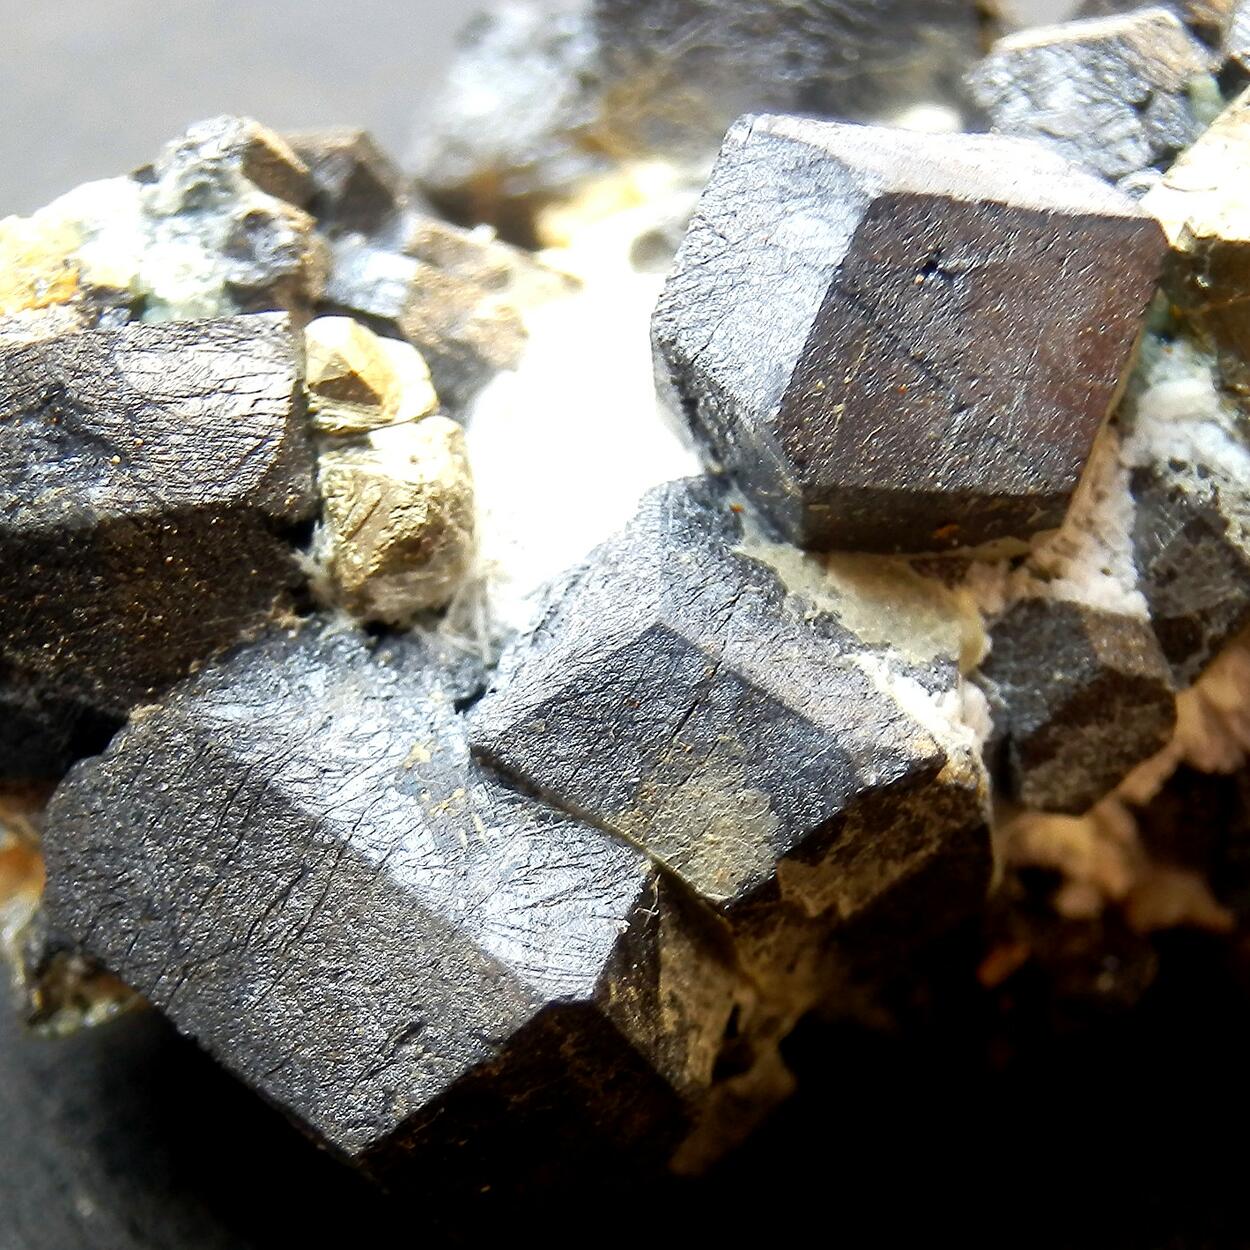 Pyrite & Magnetite